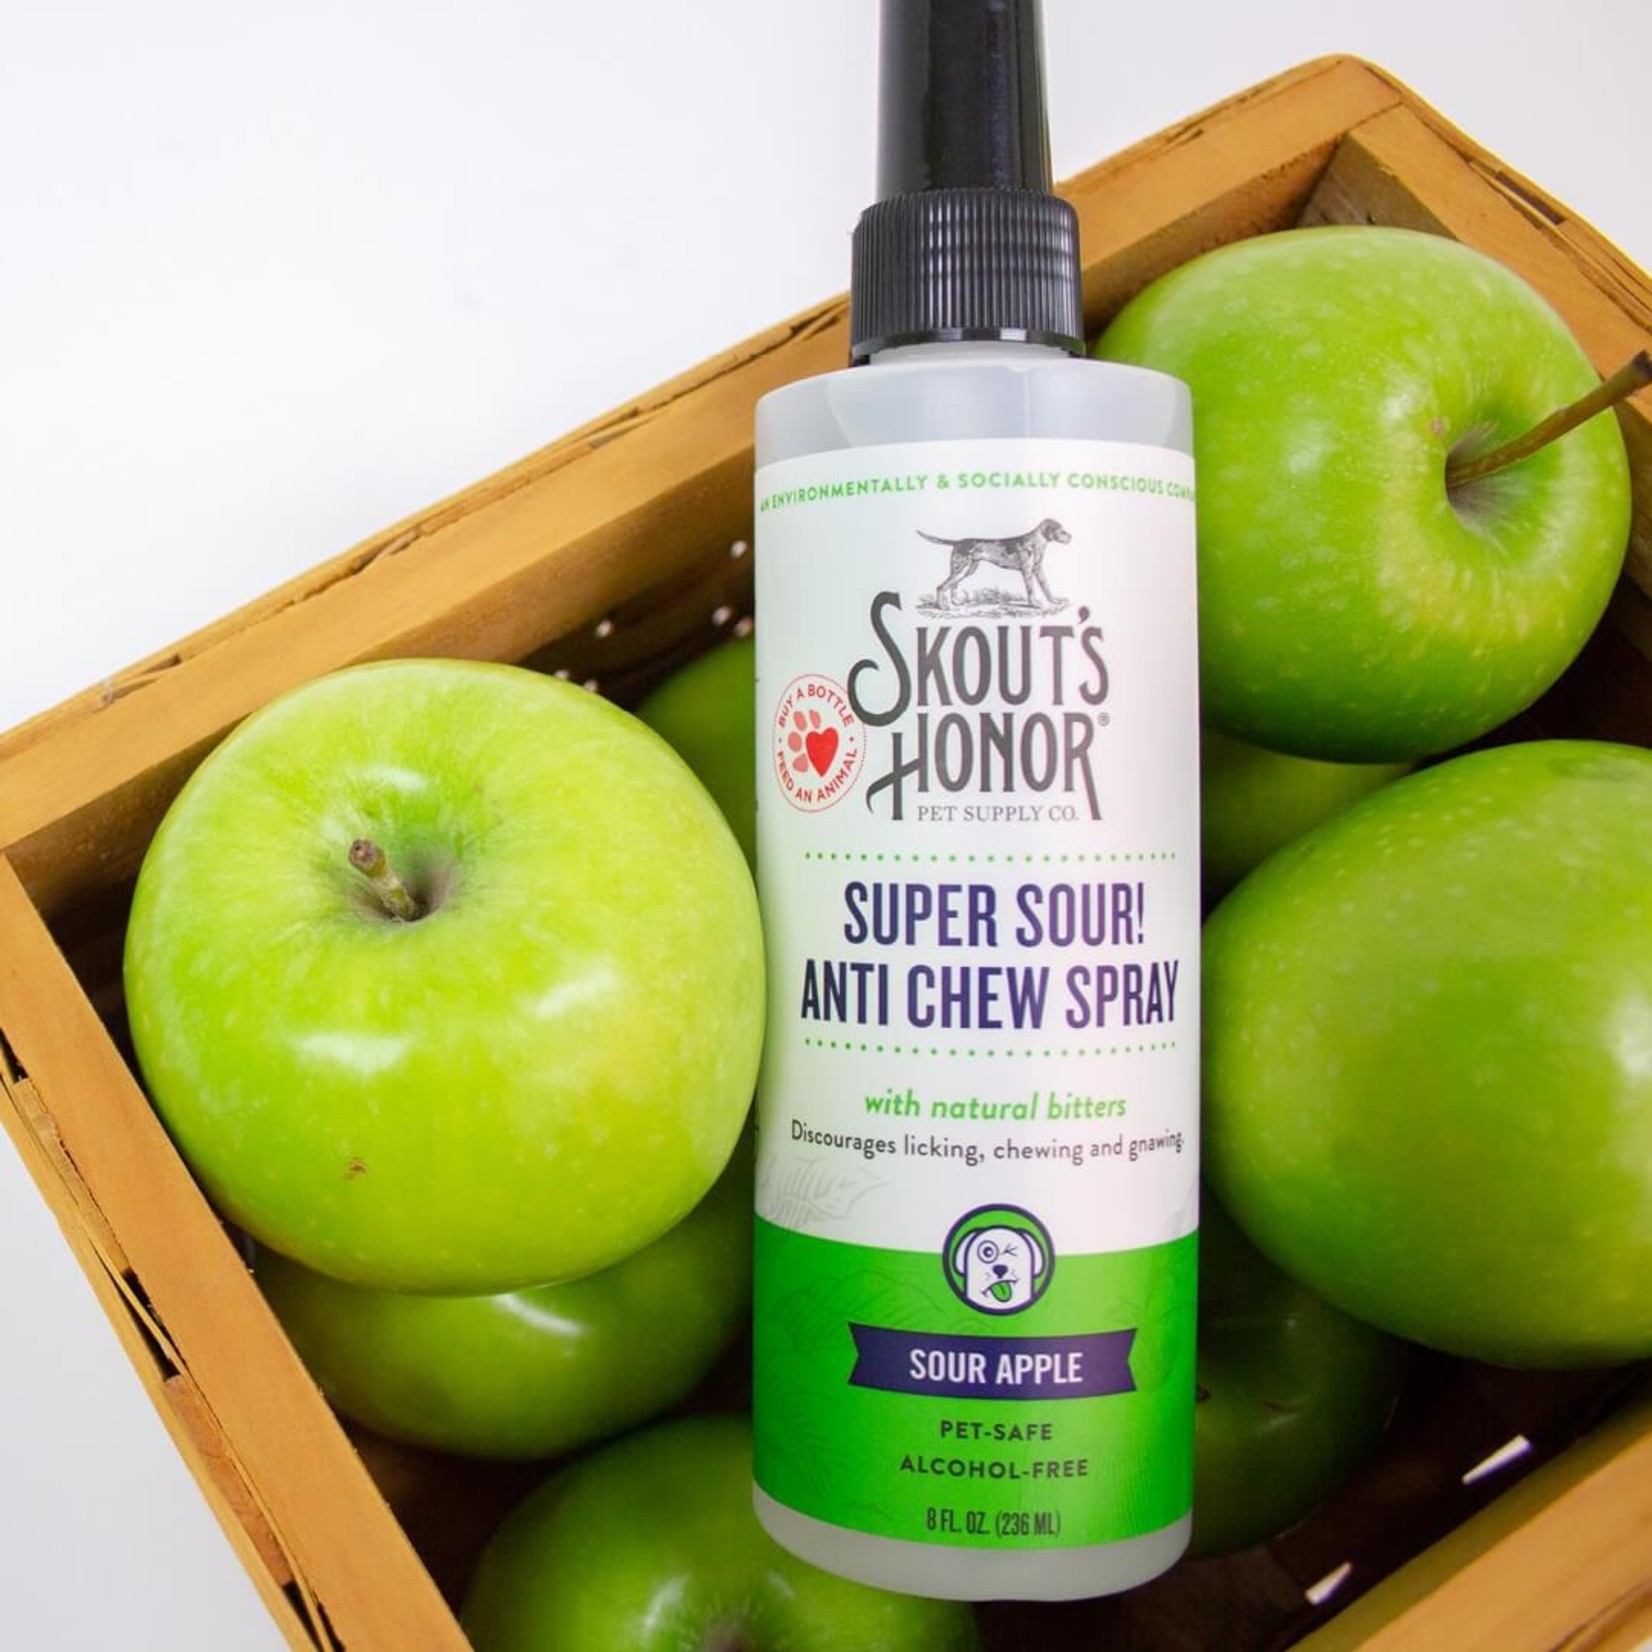 Skout’s Honor Skout's Honor Super Sour! Anti-Chew Spray 8oz